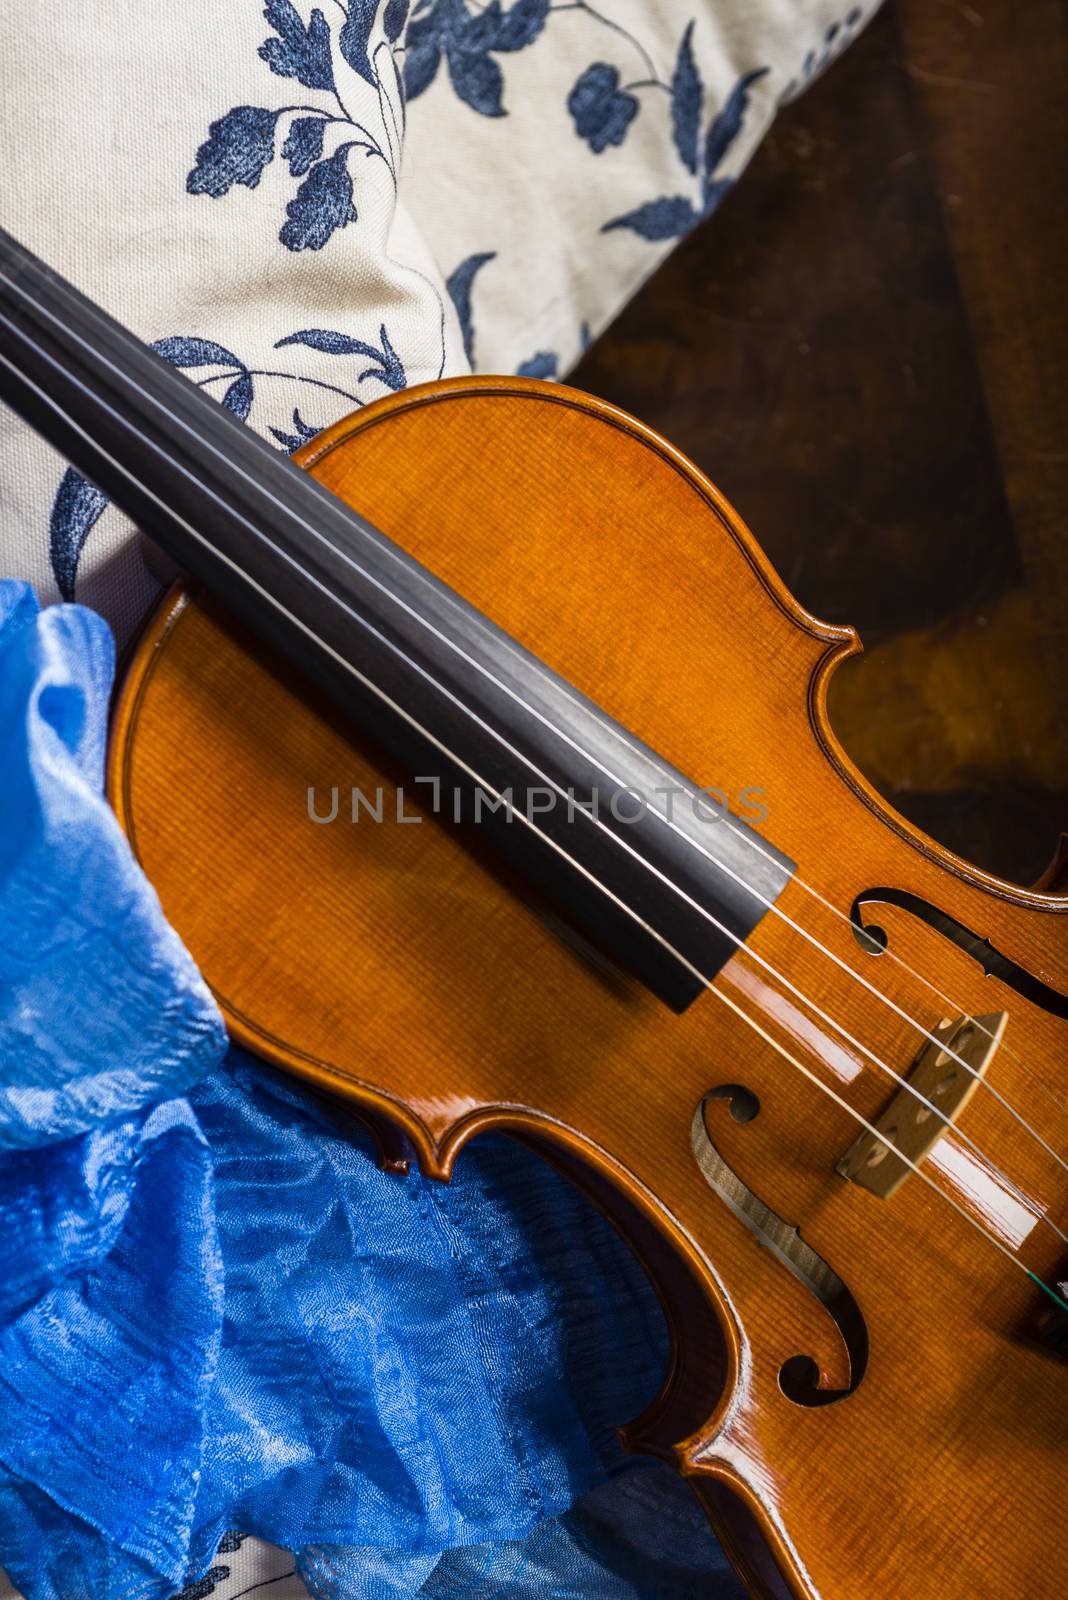 Violin in a still life composition